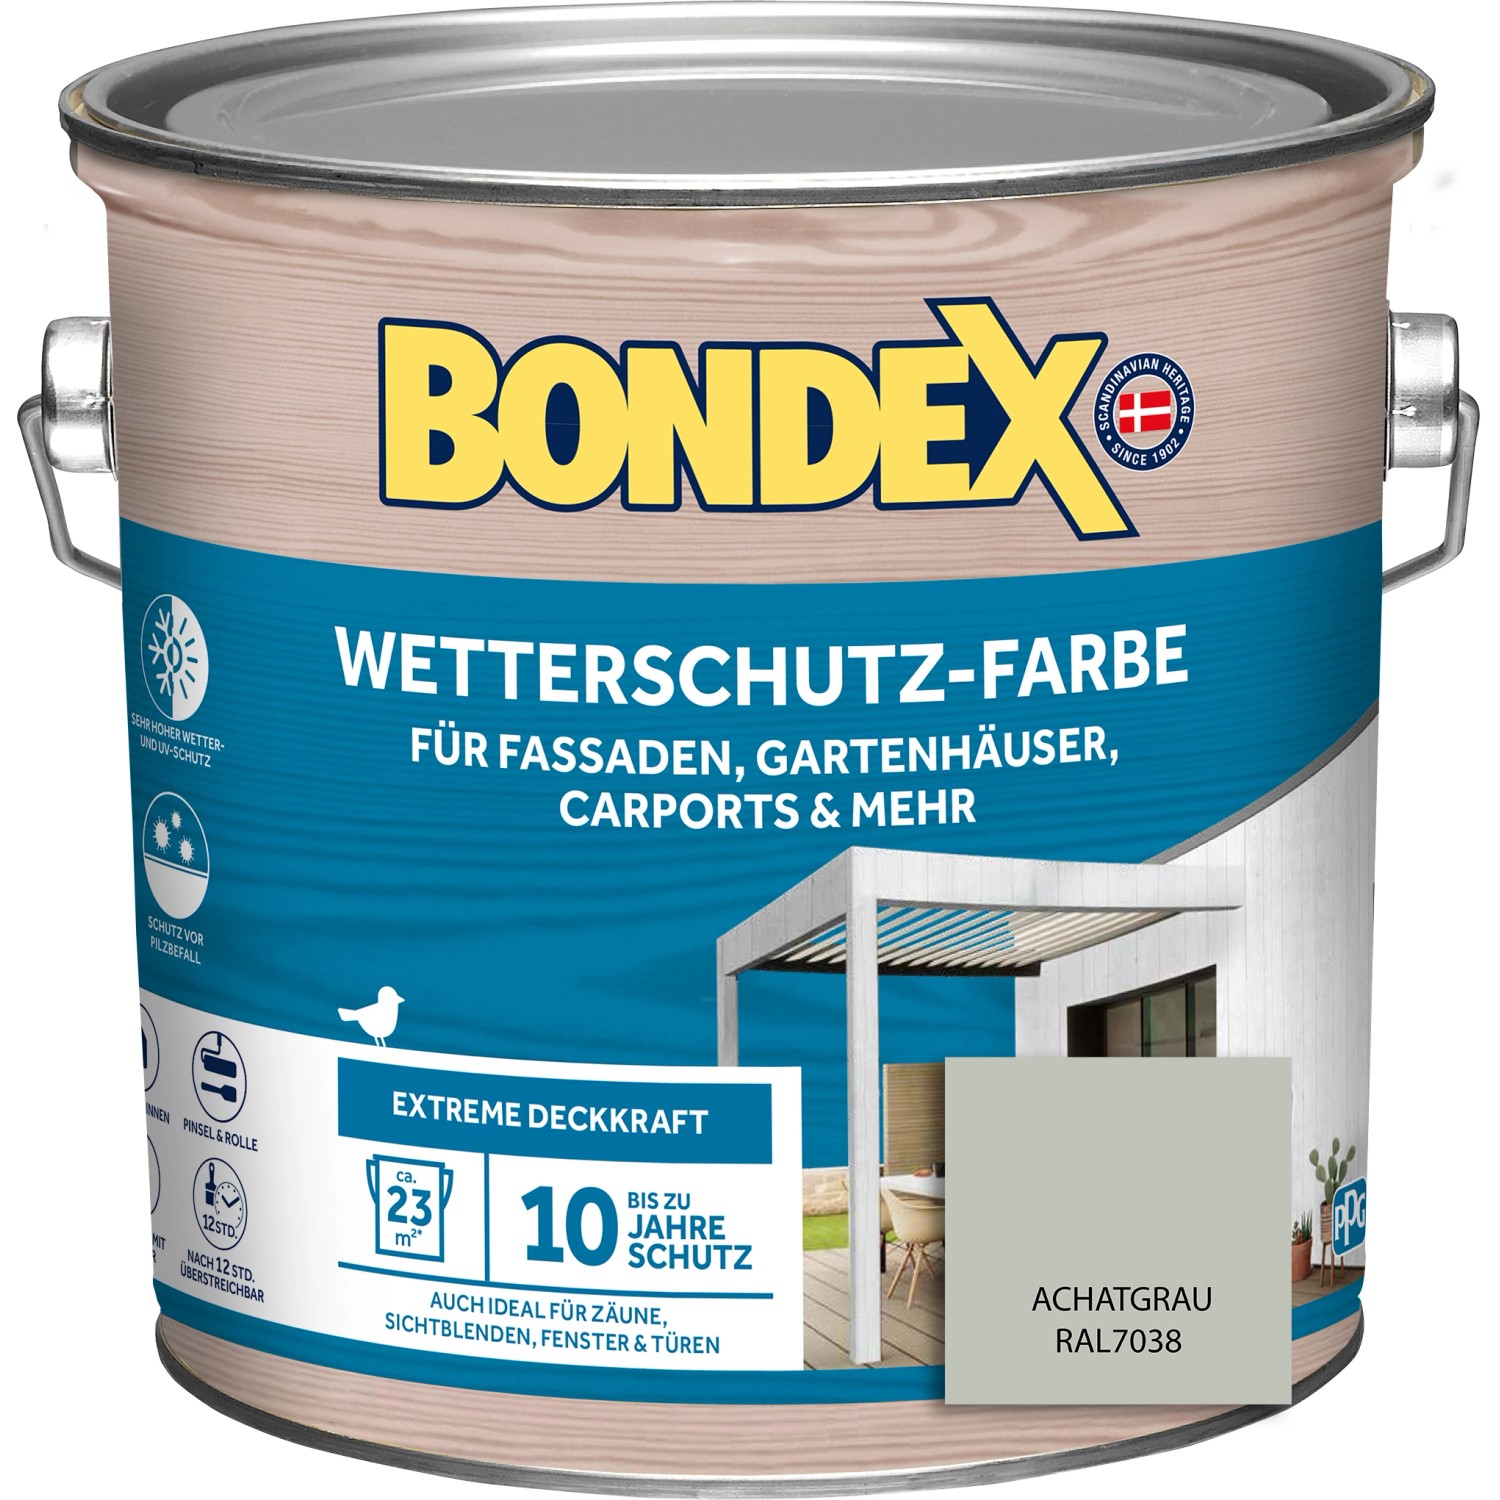 Bondex Wetterschutz-Farbe RAL 7038 Achatgrau 2,5 l